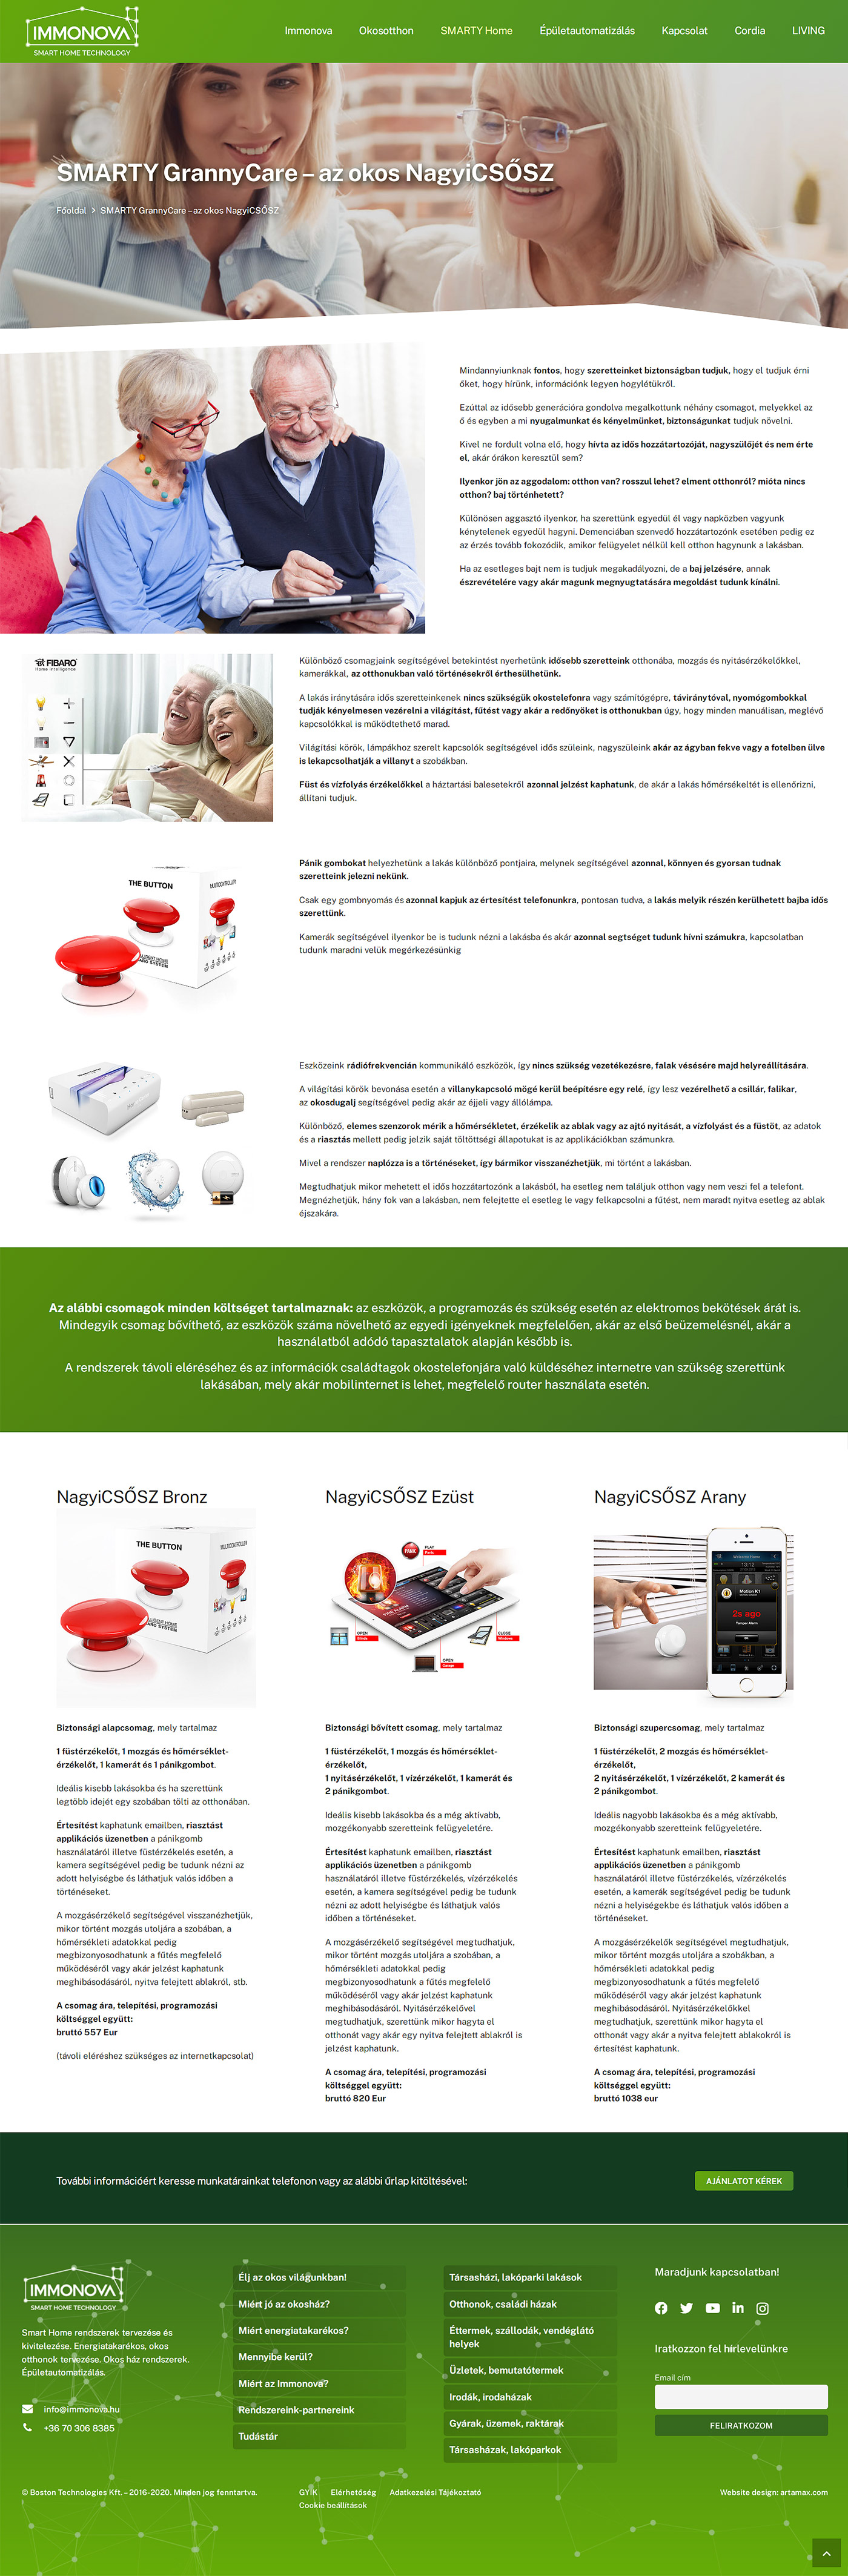 Immonova website design screenshot